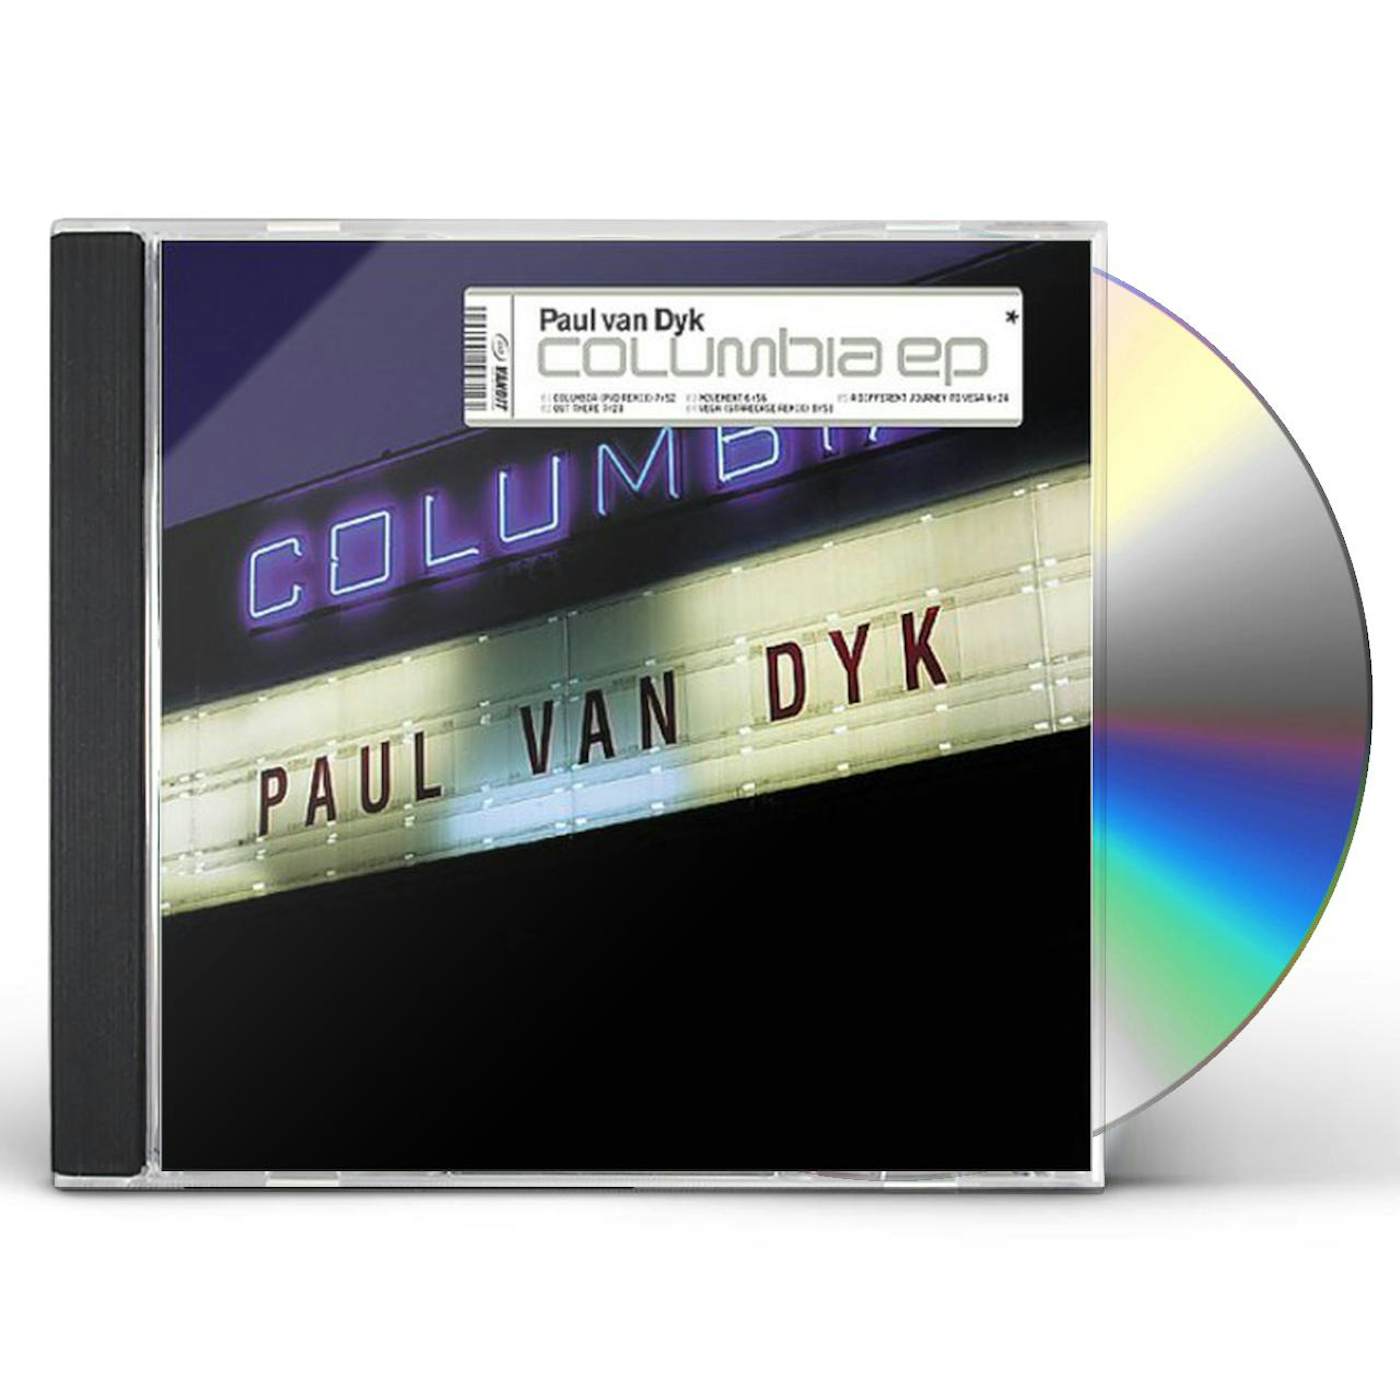 Paul van Dyk COLUMBIA CD